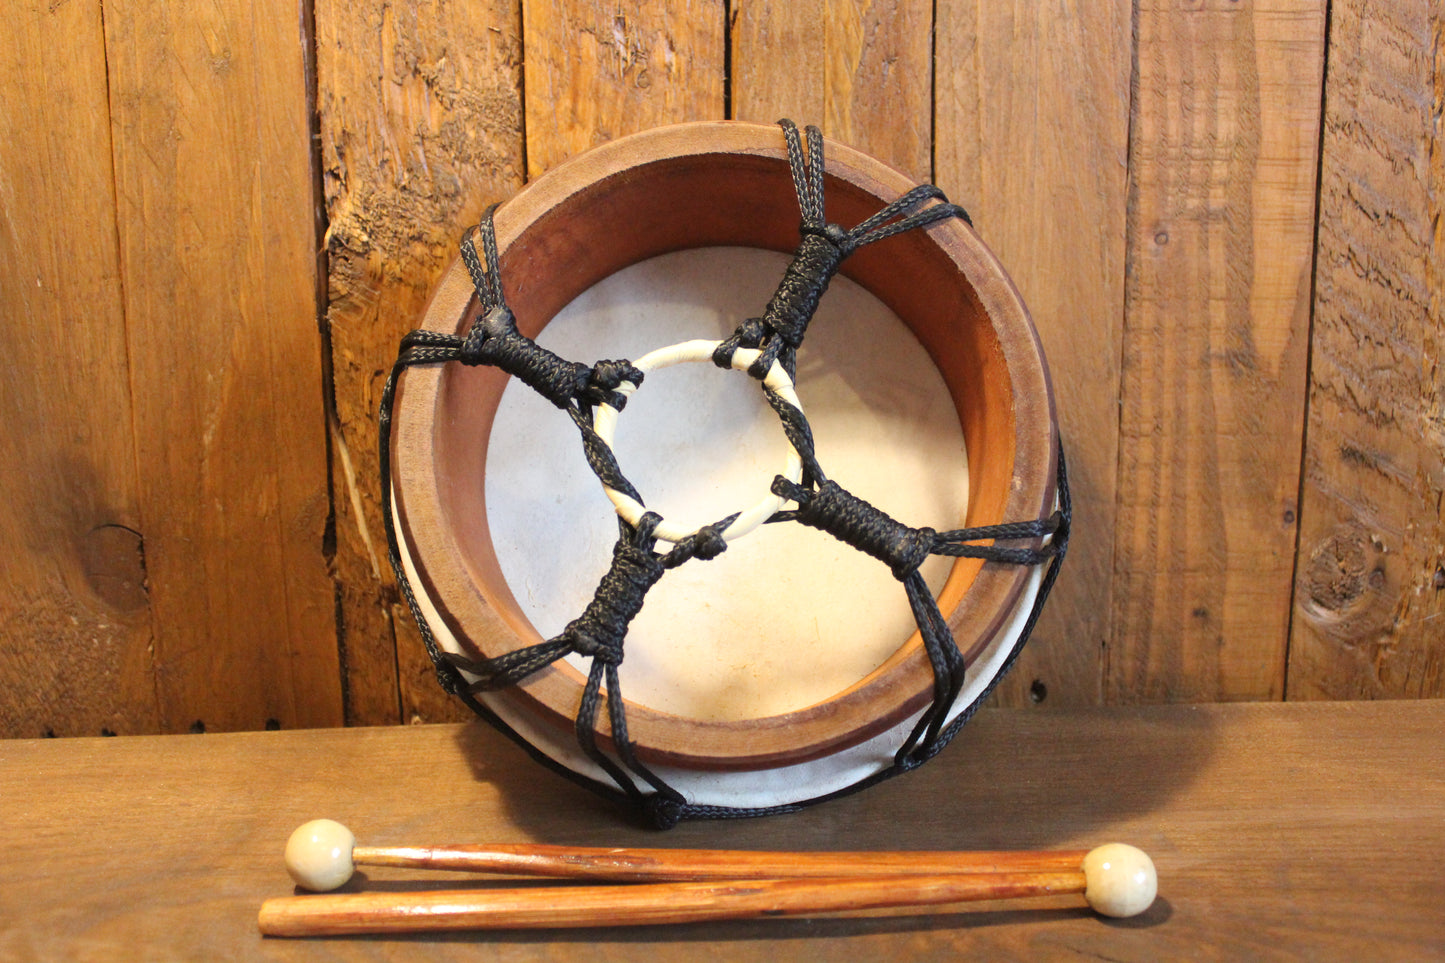 Mandala Shamanic Drum with Sticks